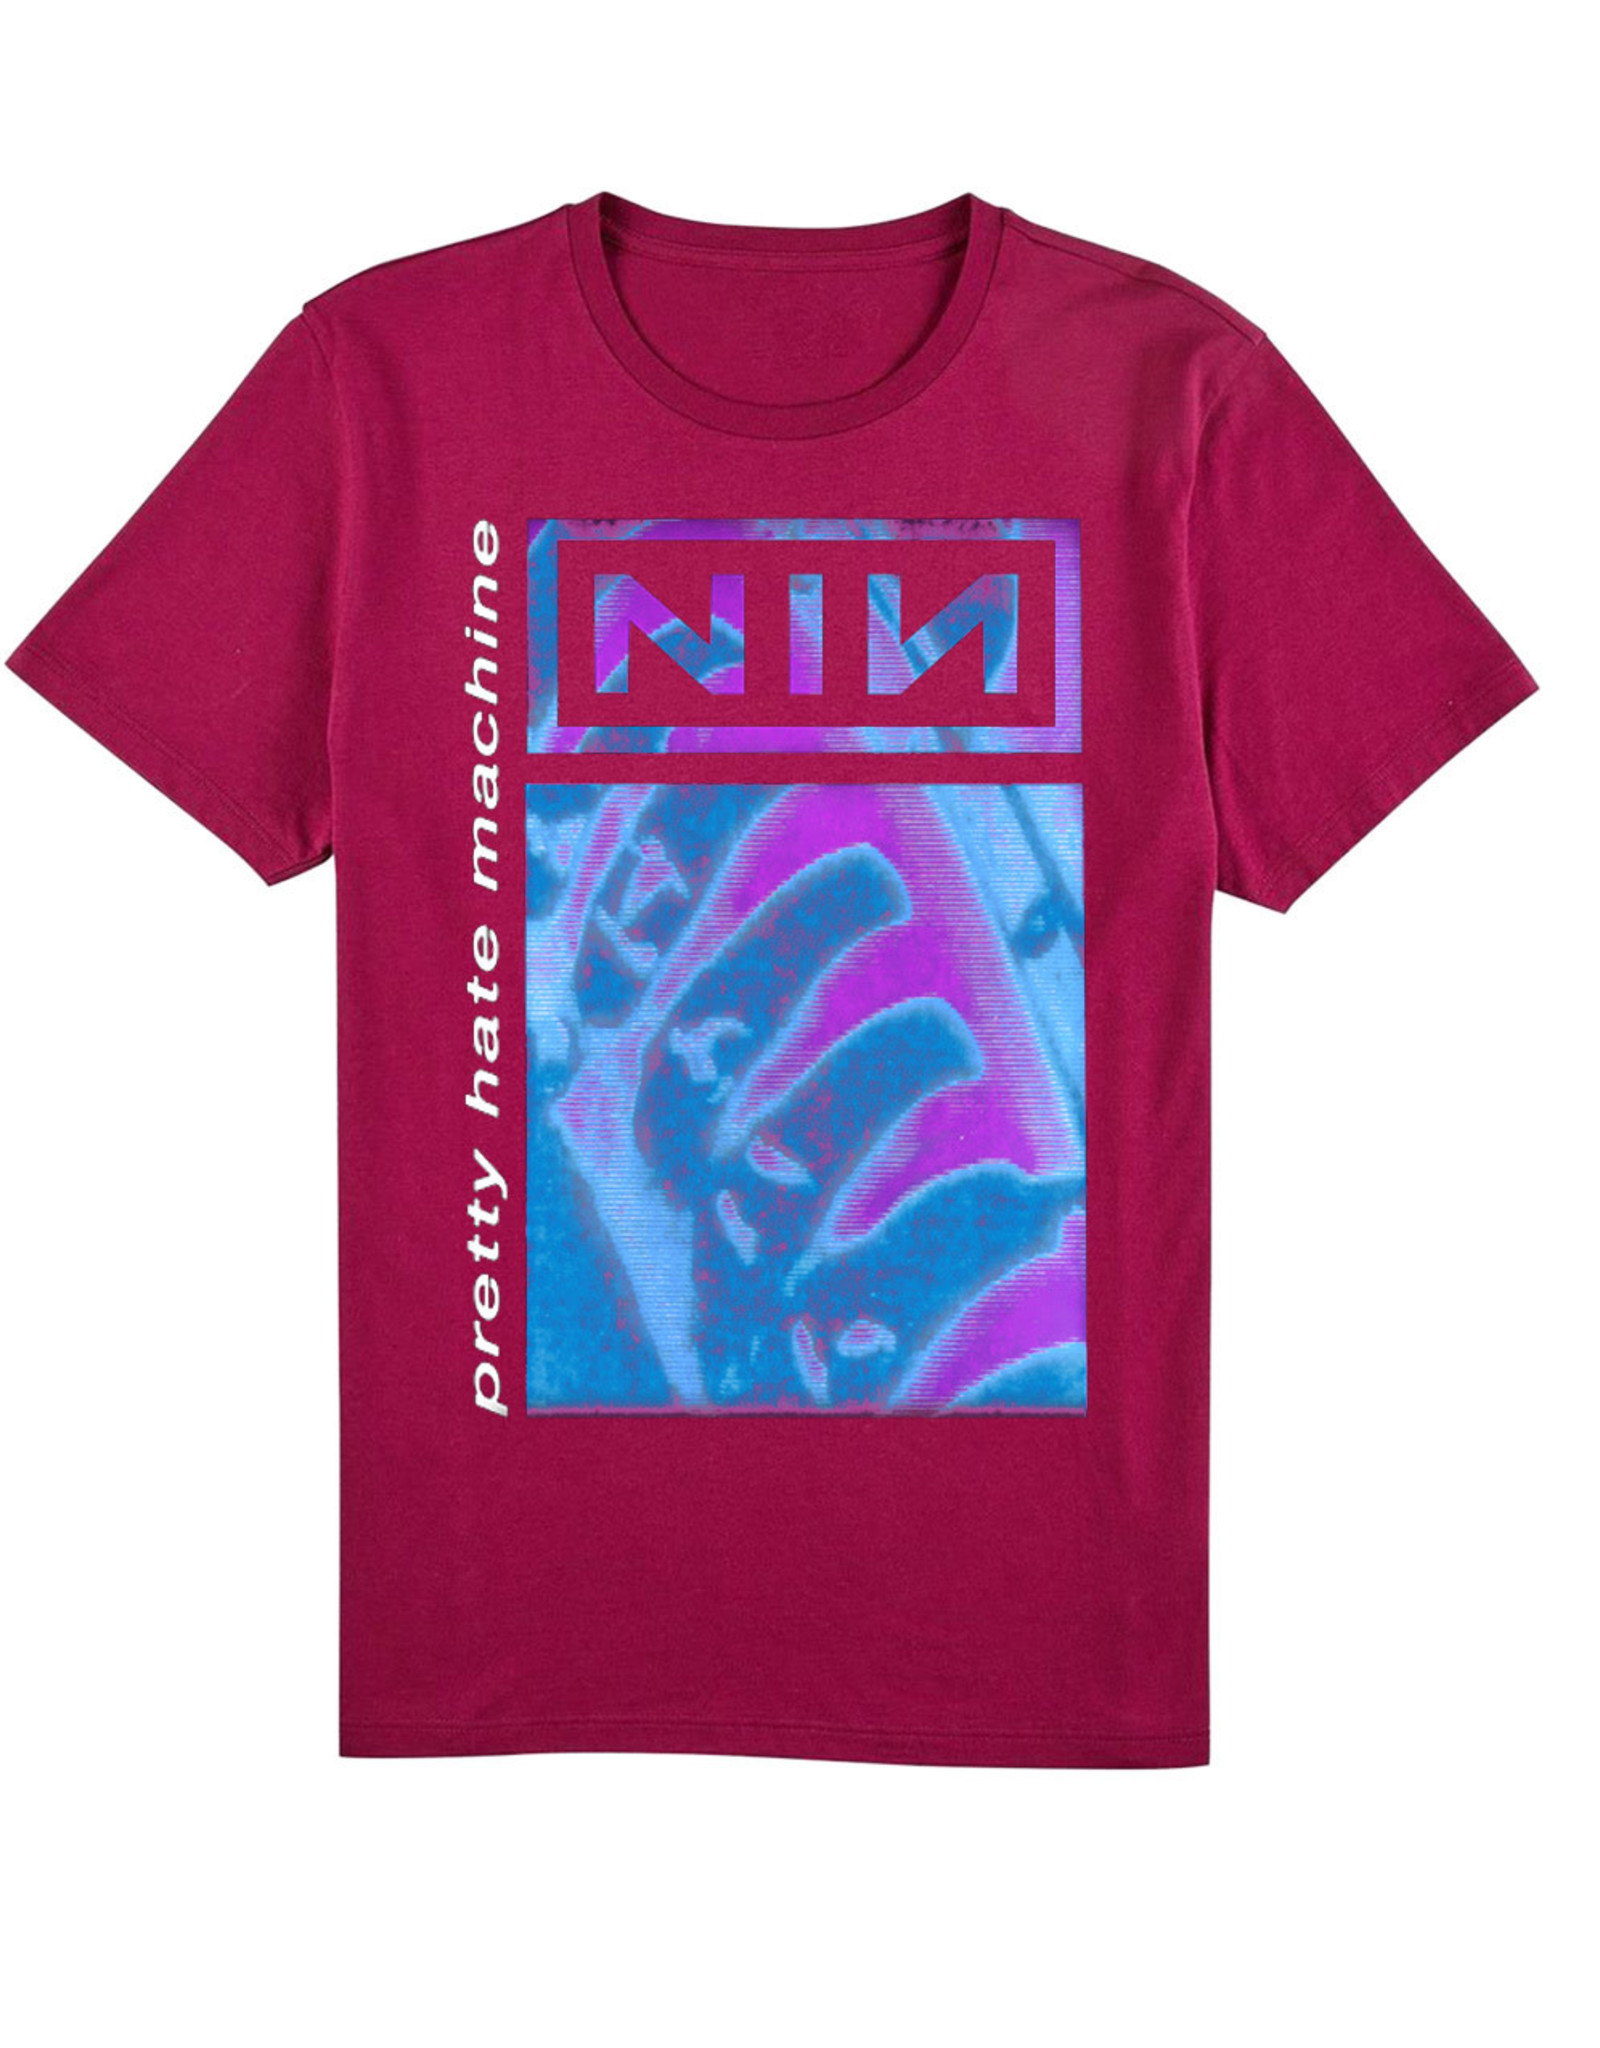 Nine Inch Nails "Pretty Hate Machine" Magenta T-Shirt